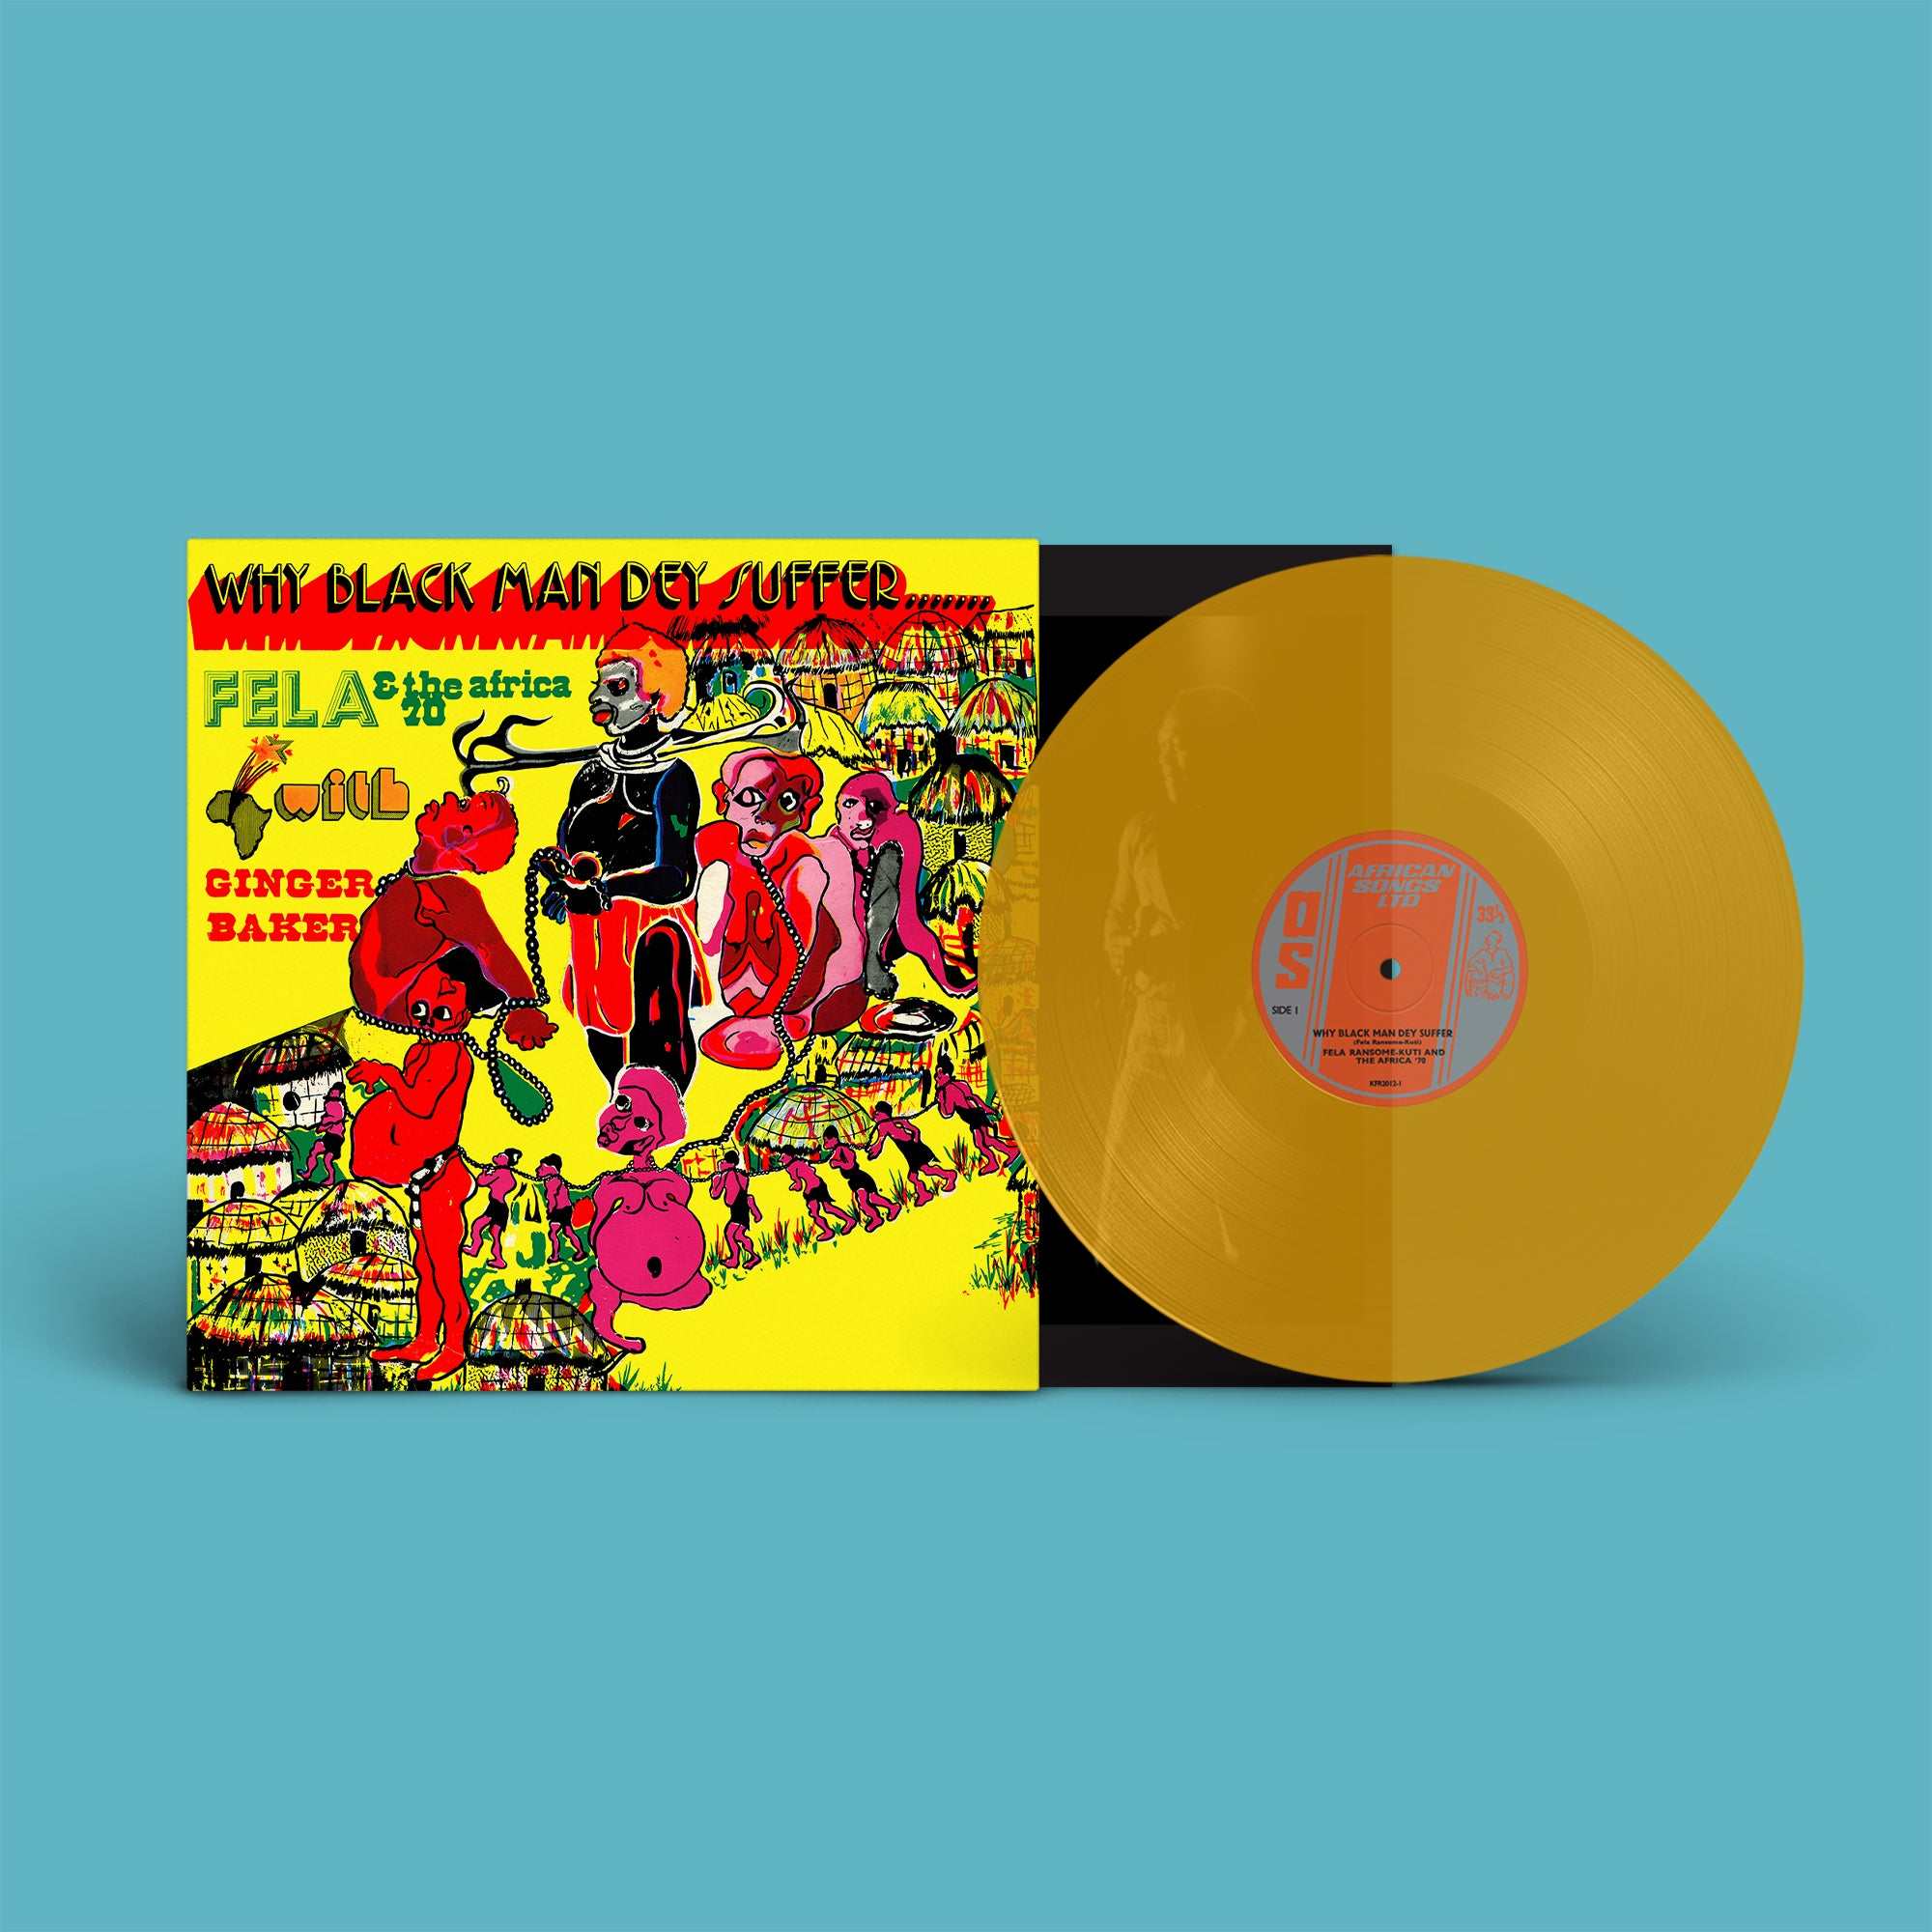 Fela Kuti - Why Black Man Dey Suffer: Translucent Yellow Vinyl 12" Single